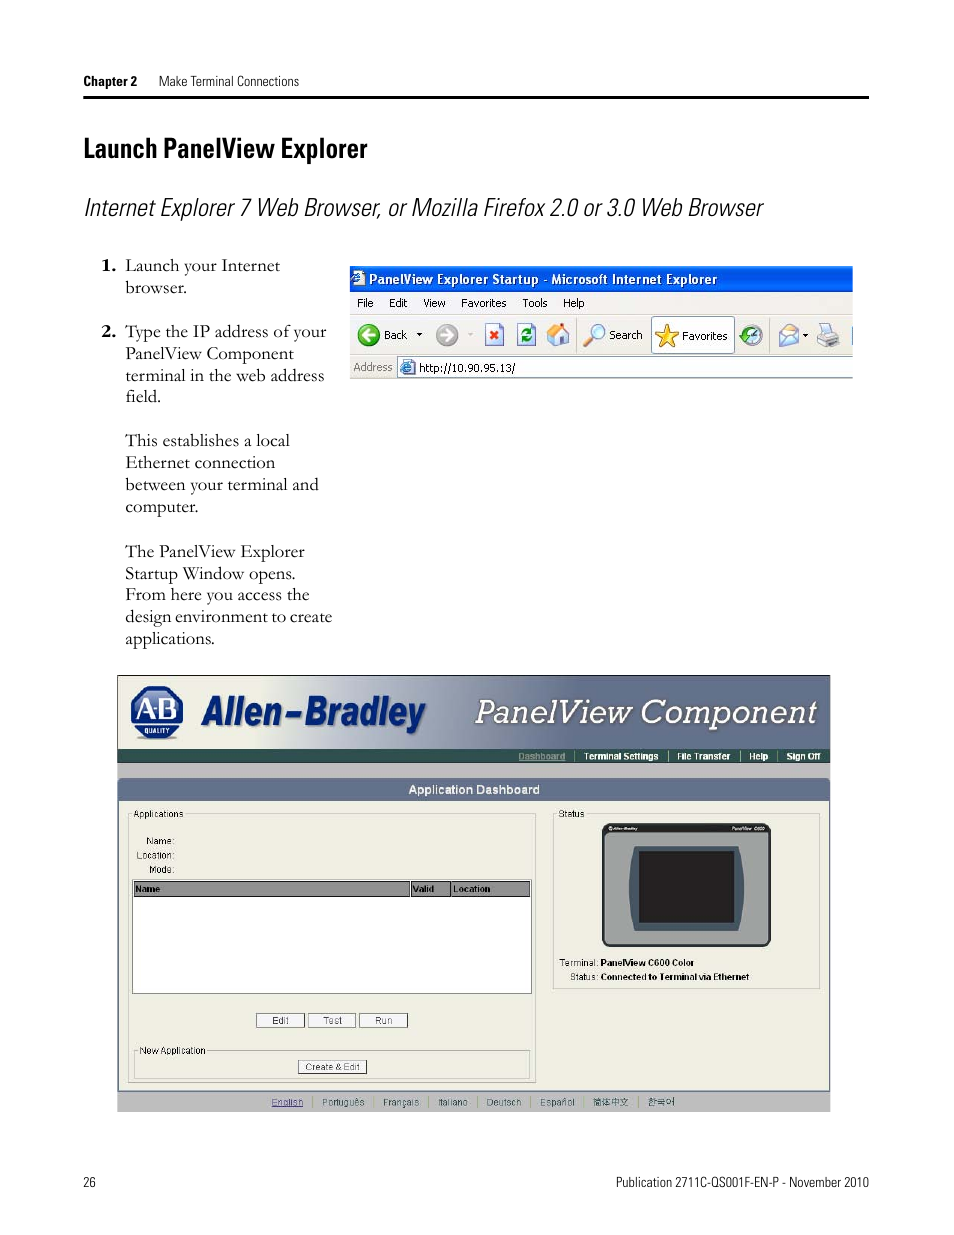 panelview explorer software download